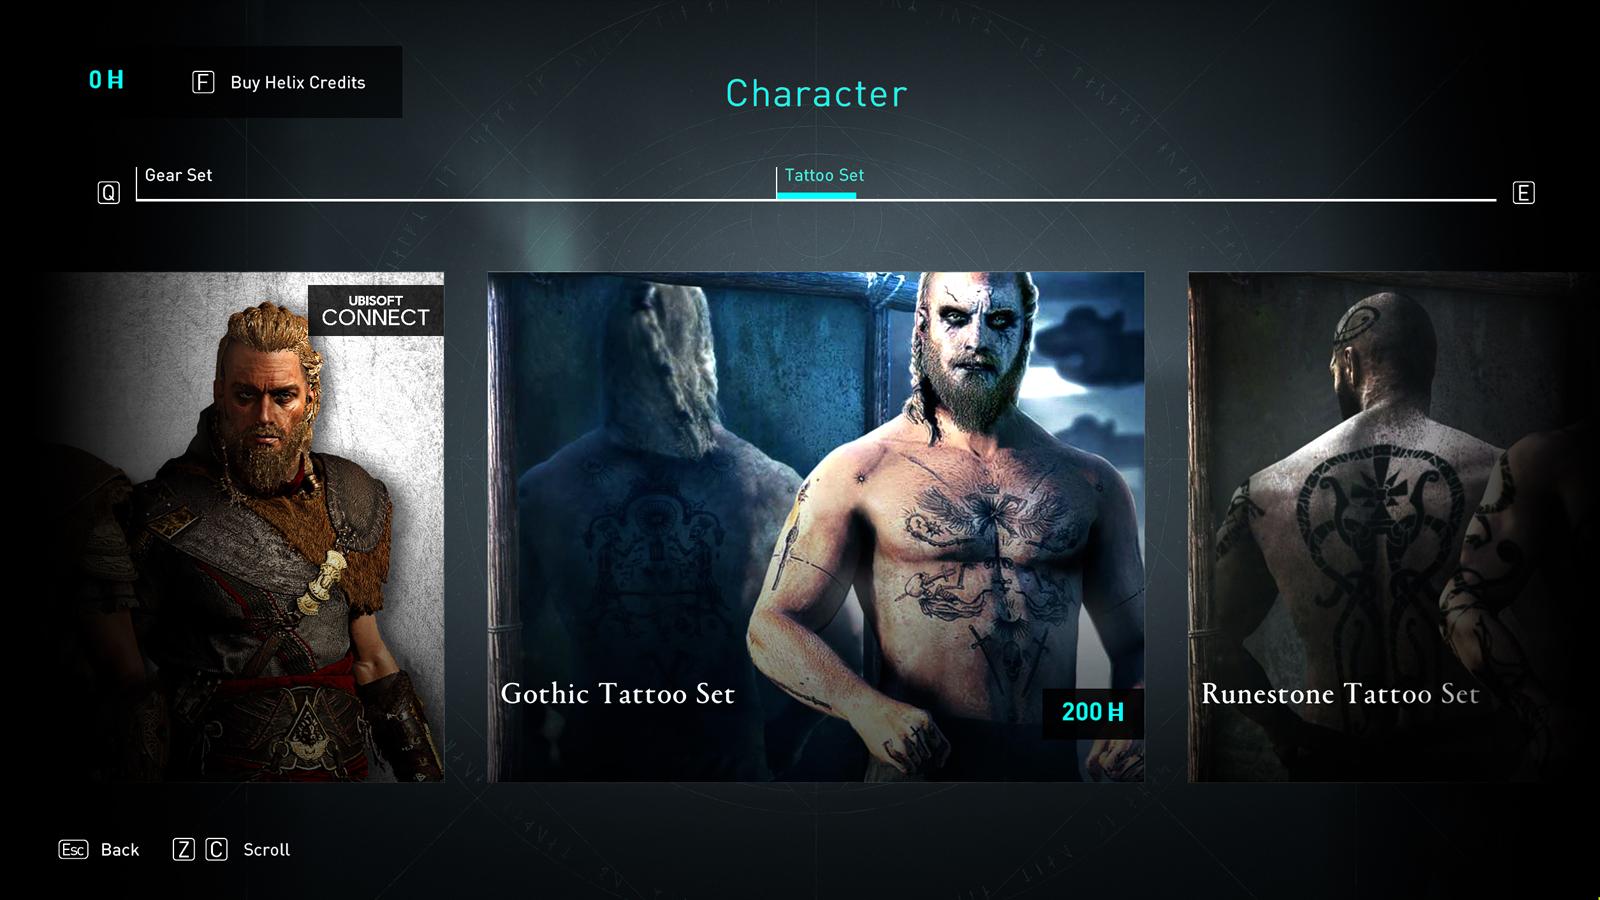 Gothic tattoo set in Assassin's Creed Valhalla Ubisoft store